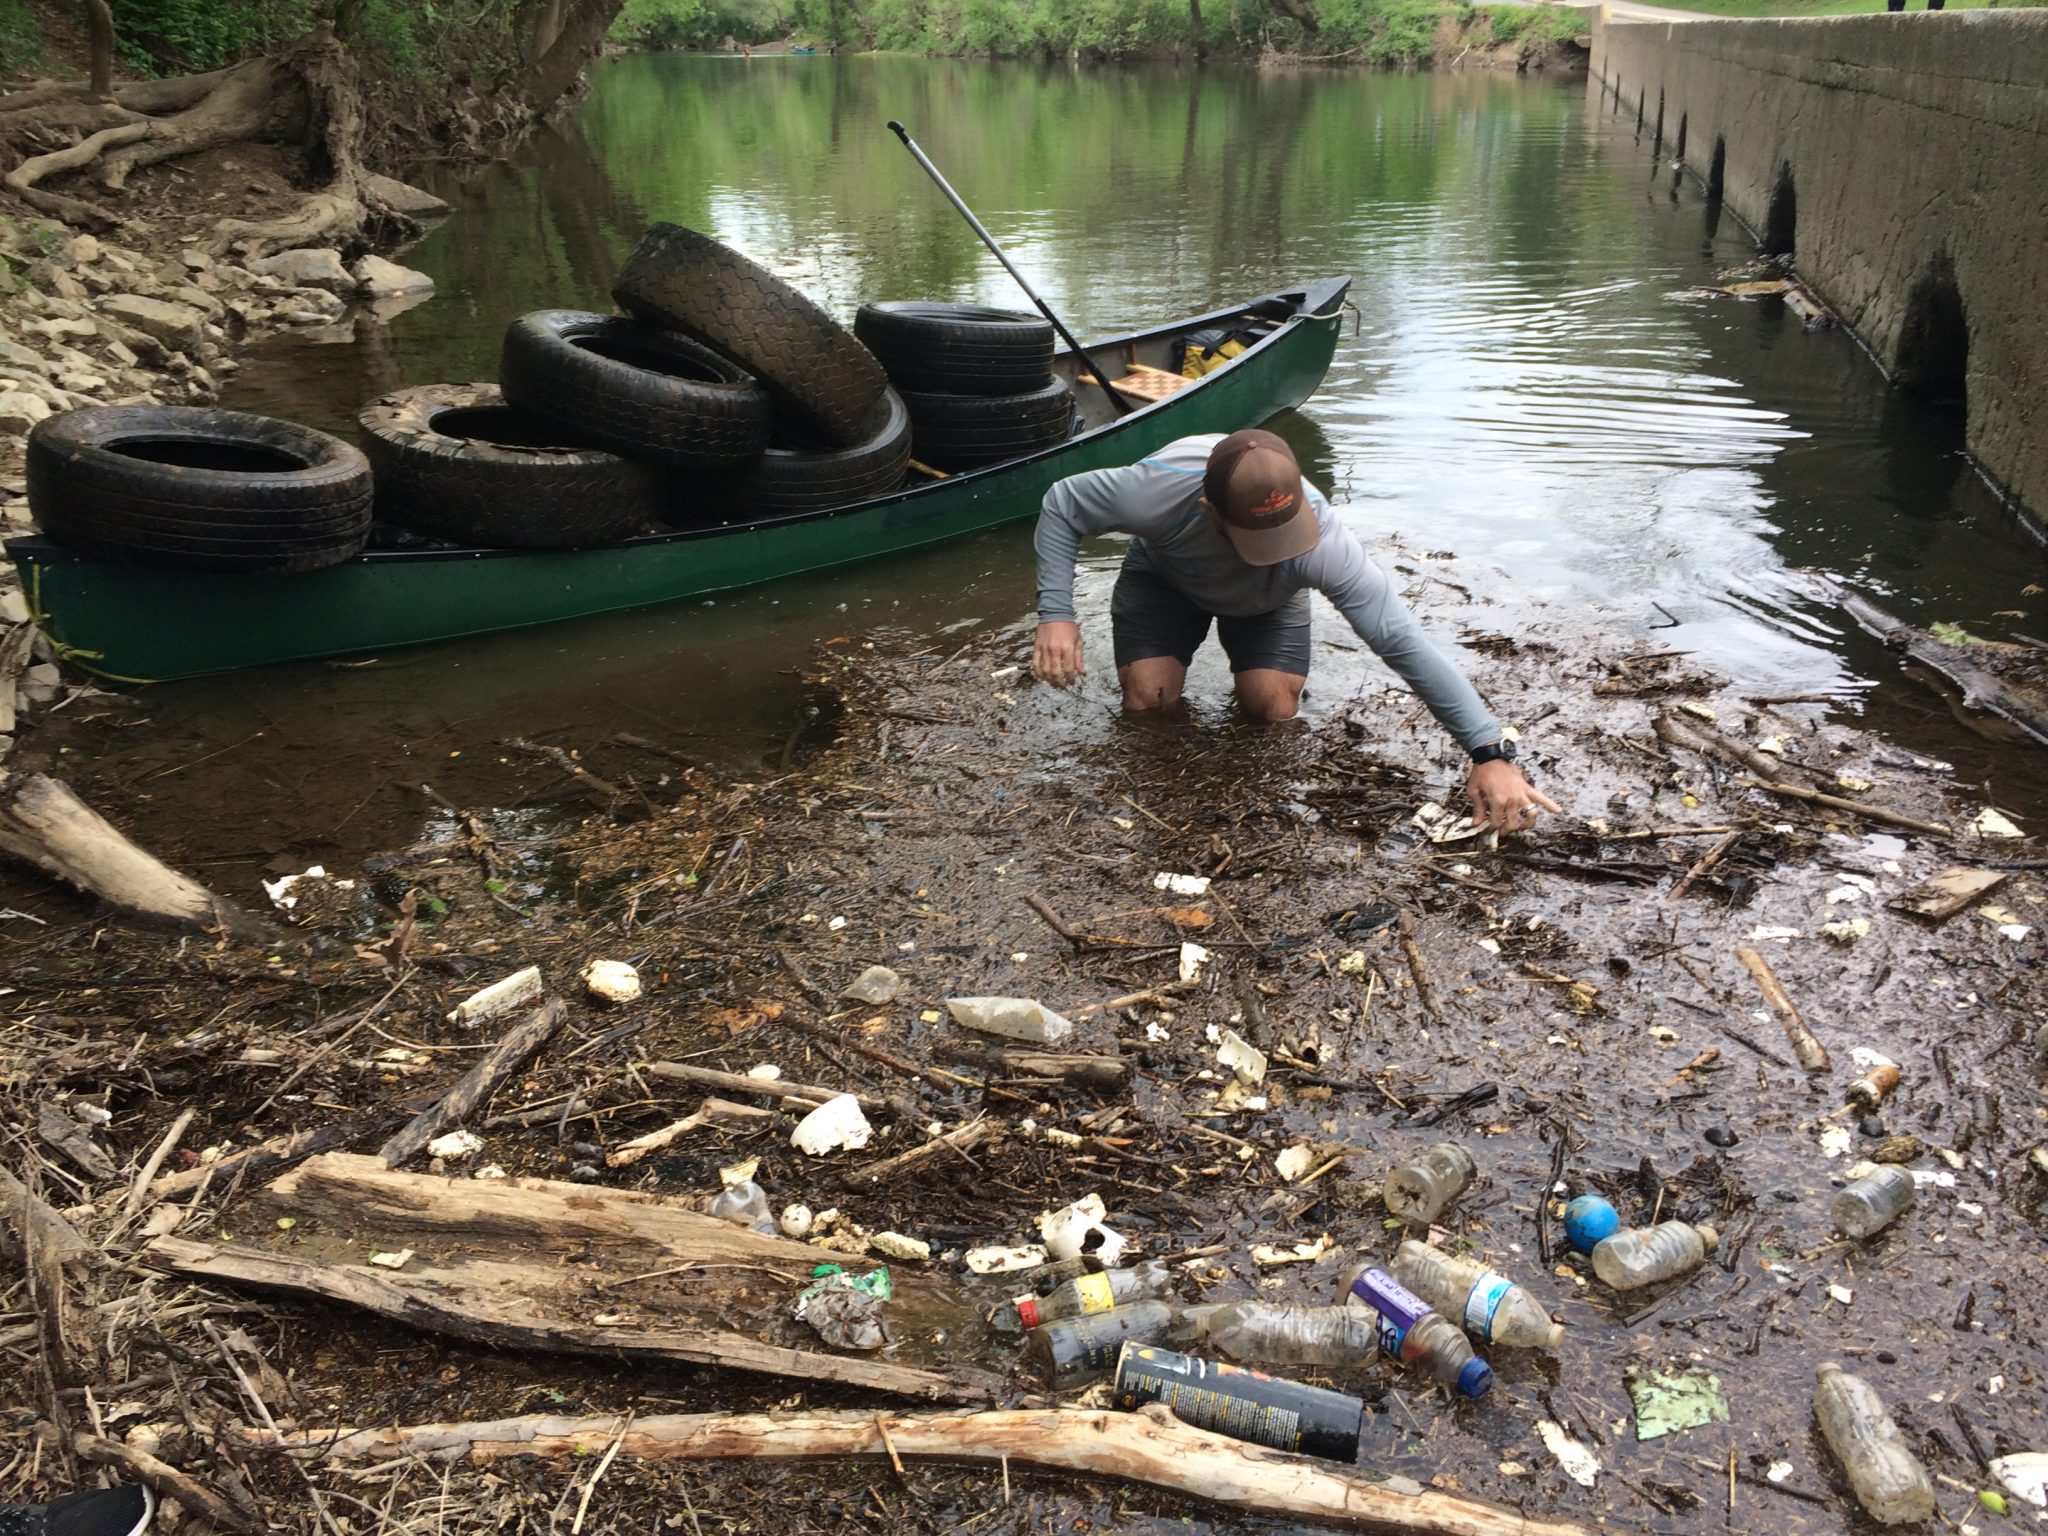 James Cleaning Debris in Roanoke River